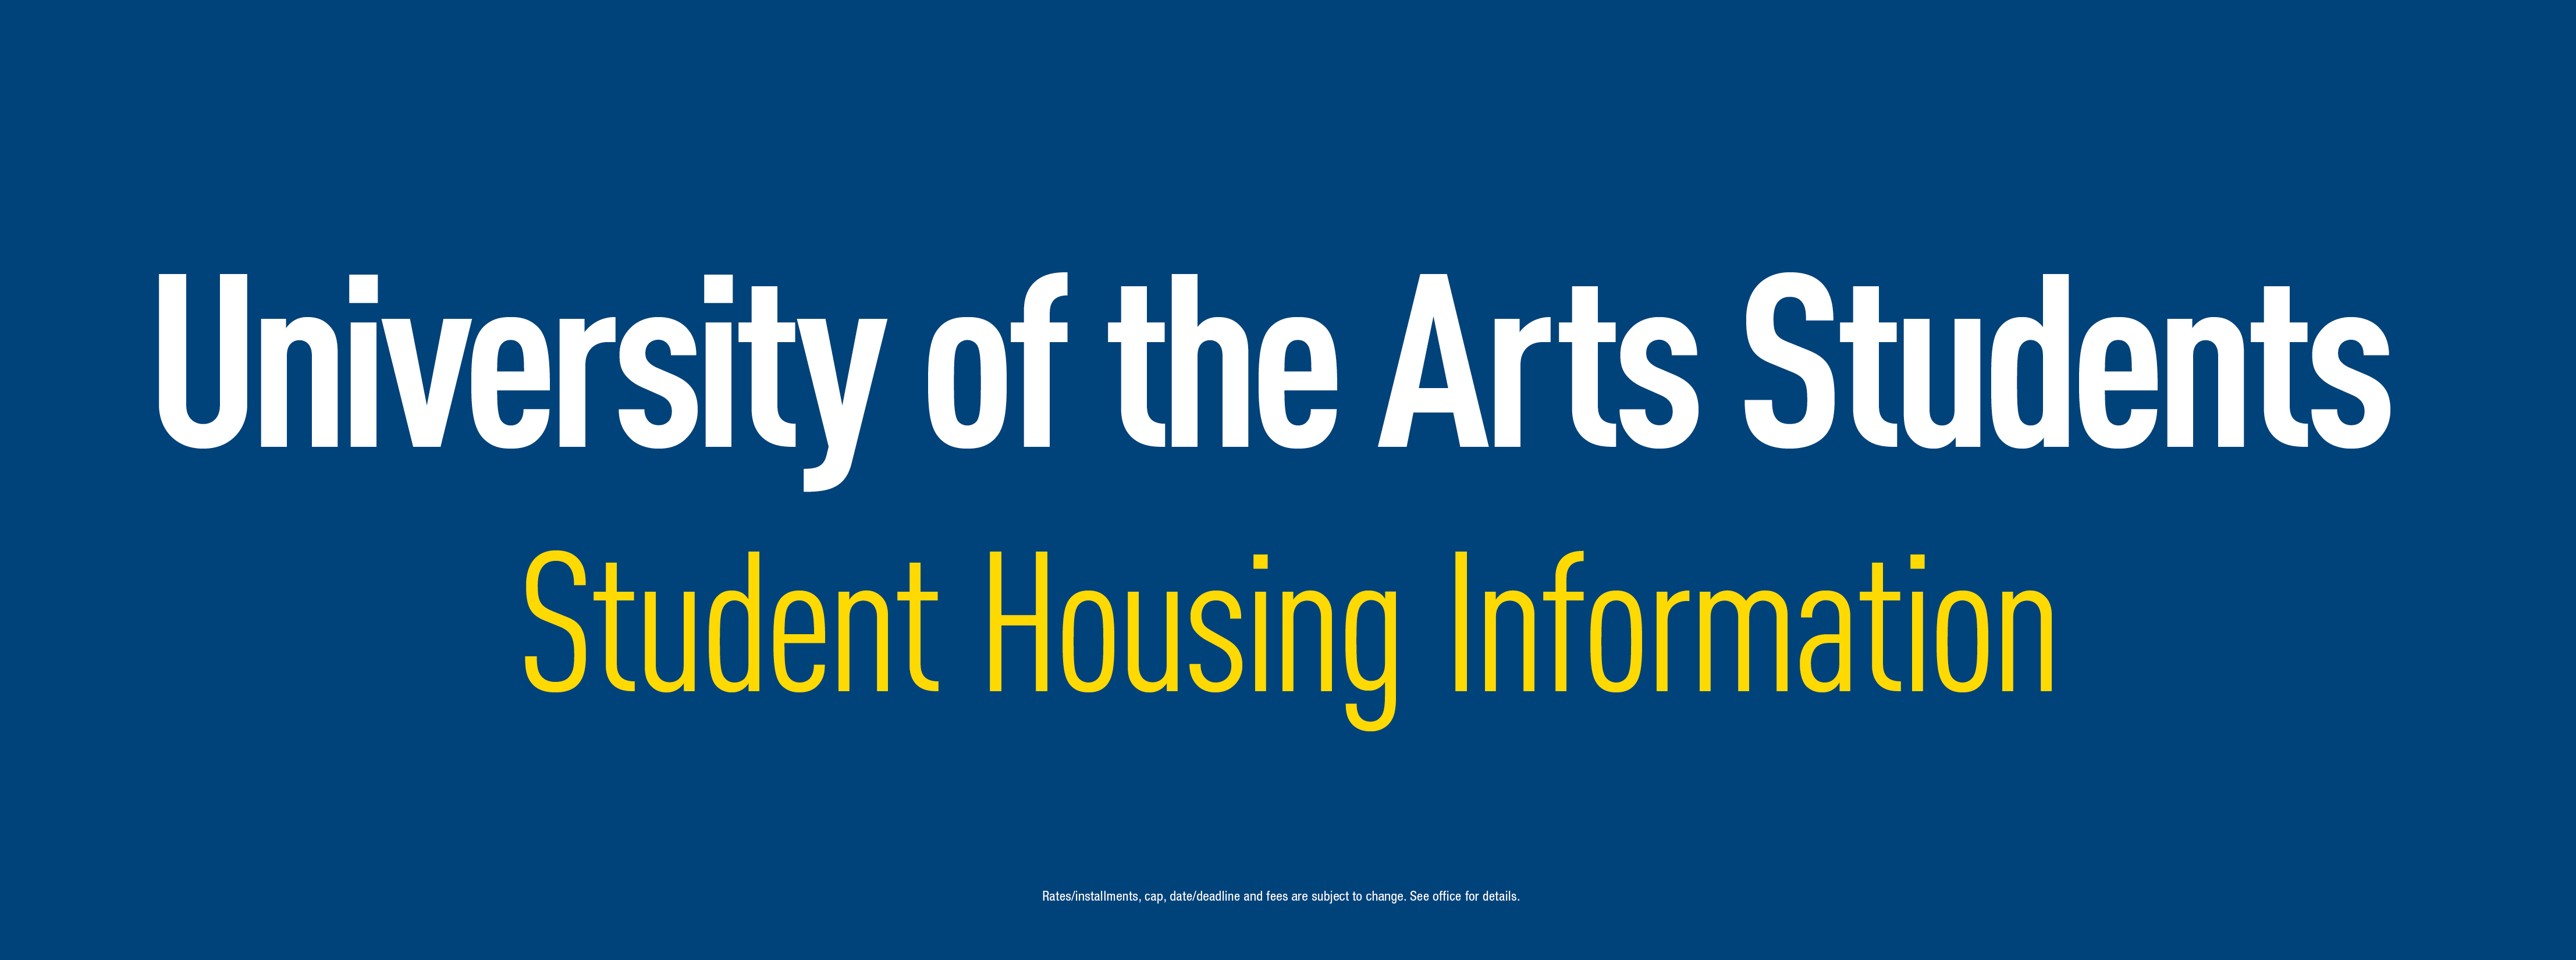 Student Housing Information